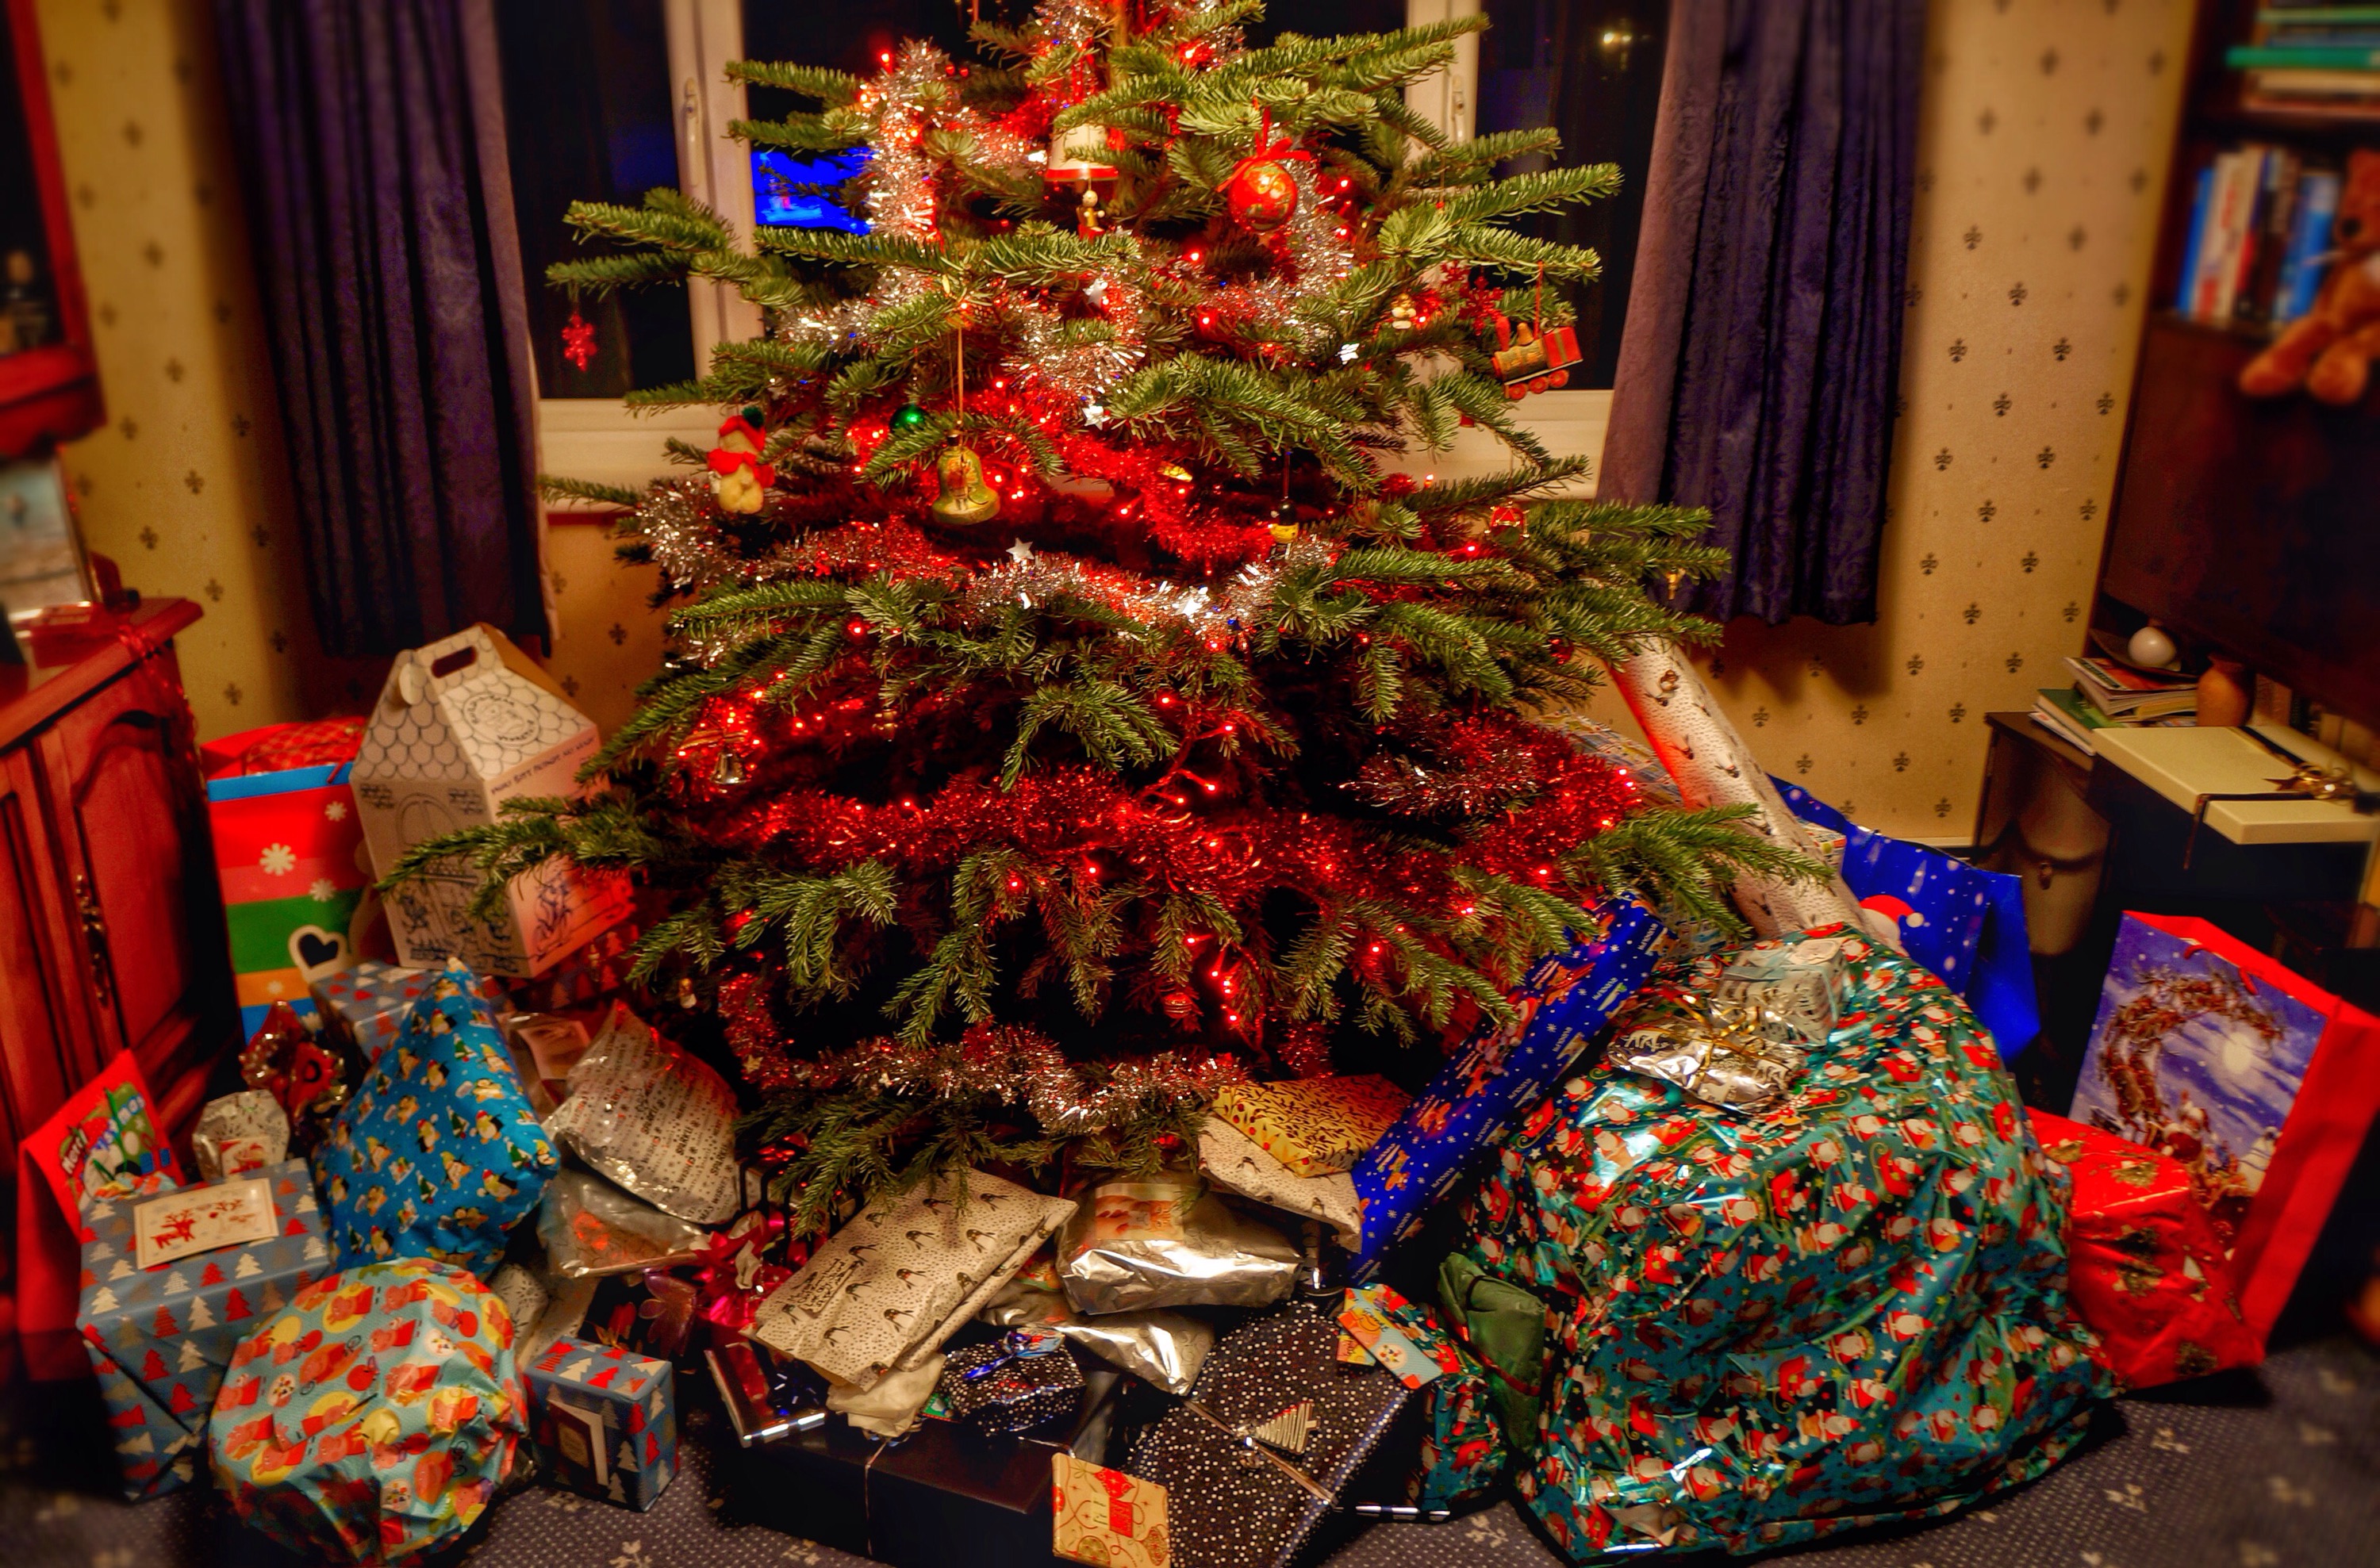 The under presents. Presents under Christmas Tree. Военный распаковывает подарок на новый год. Gifts under the Christmas Tree. Christmas Eve presents.